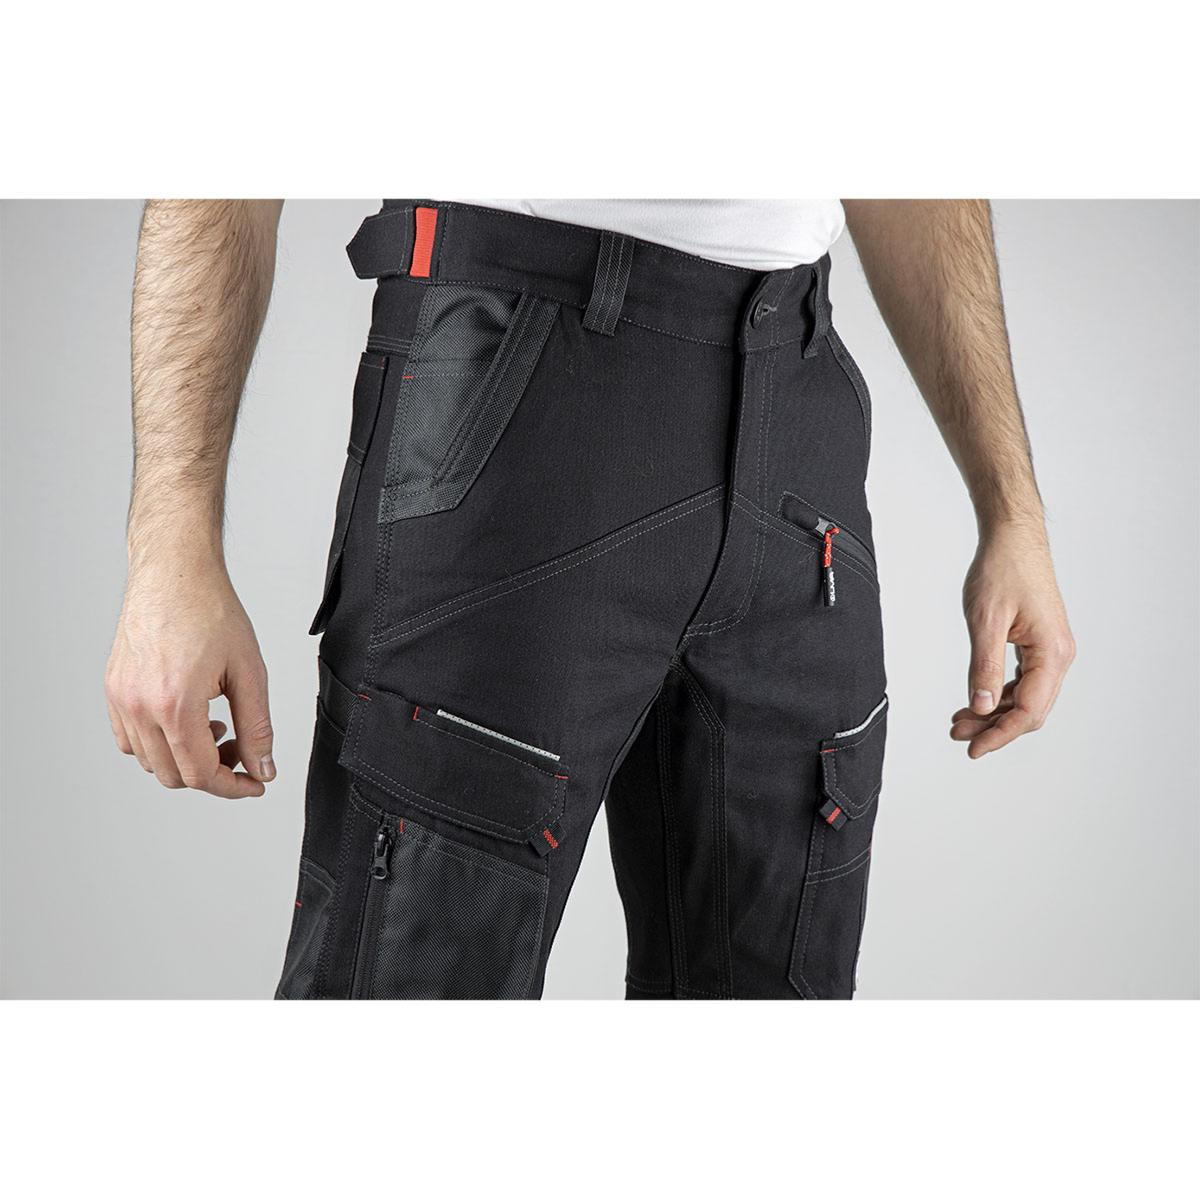 Pantalon travail multi poches stretch noir CORTEX 1783 LMA LEBEURRE 38